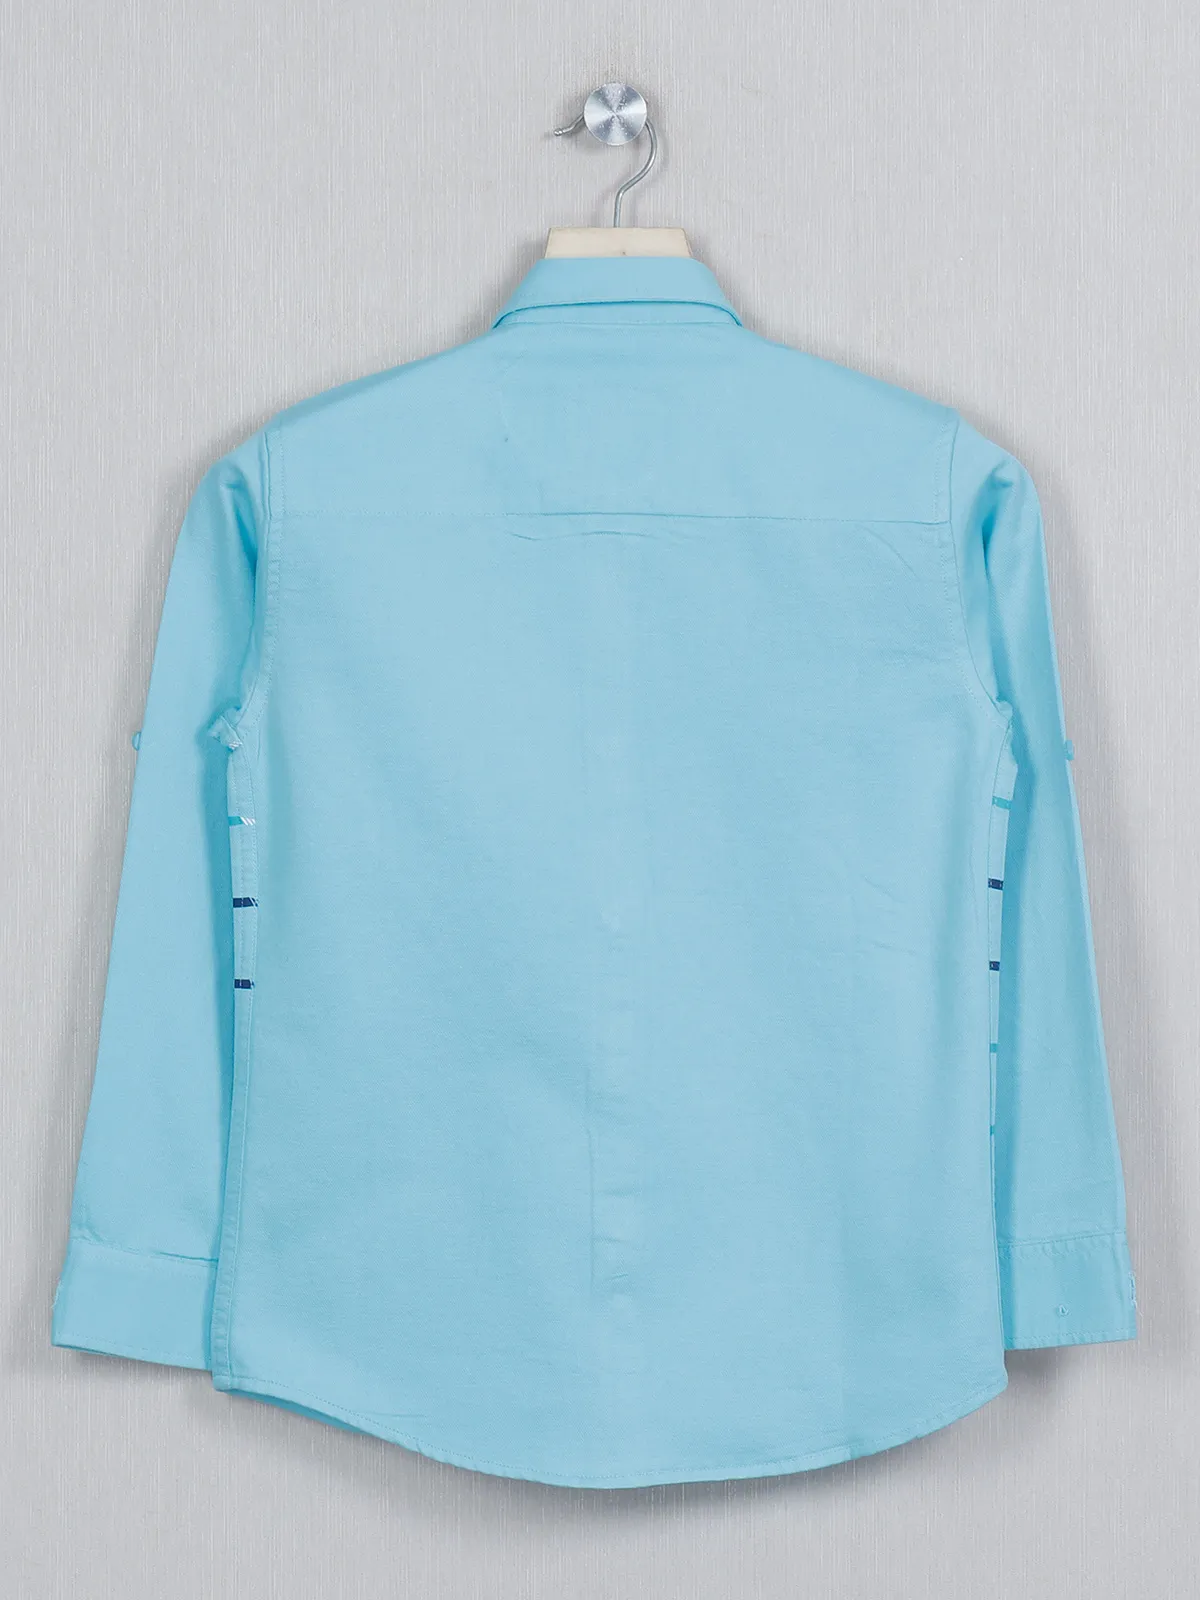 Blazo printed aqua casual wear shirt in cotton